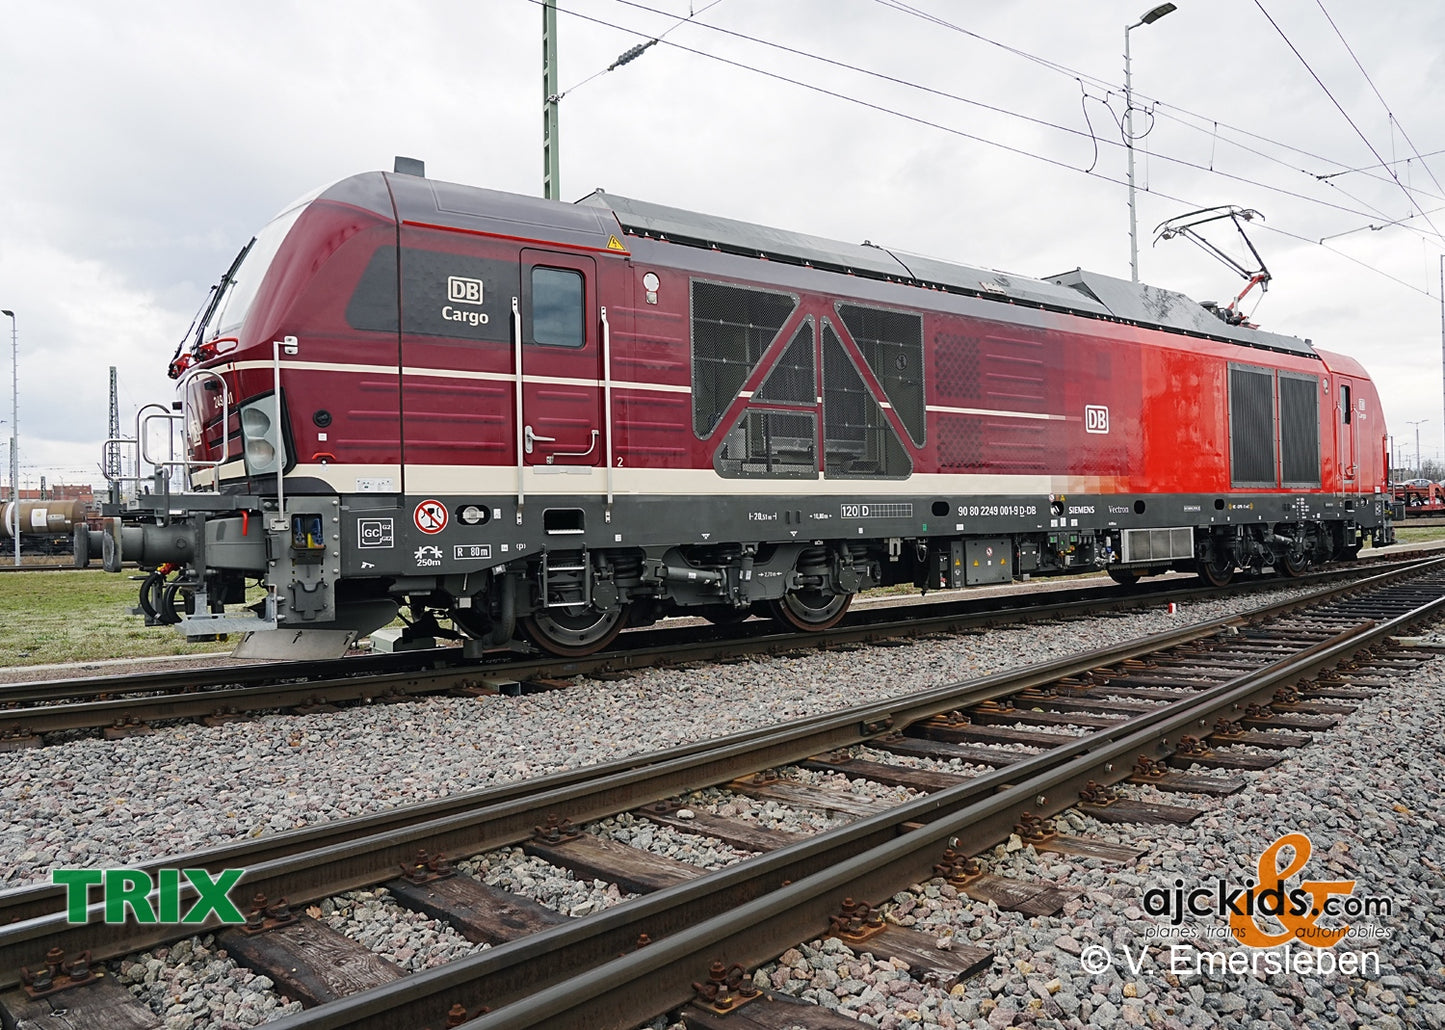 Trix 25293 - Class 249 Dual Power Locomotive